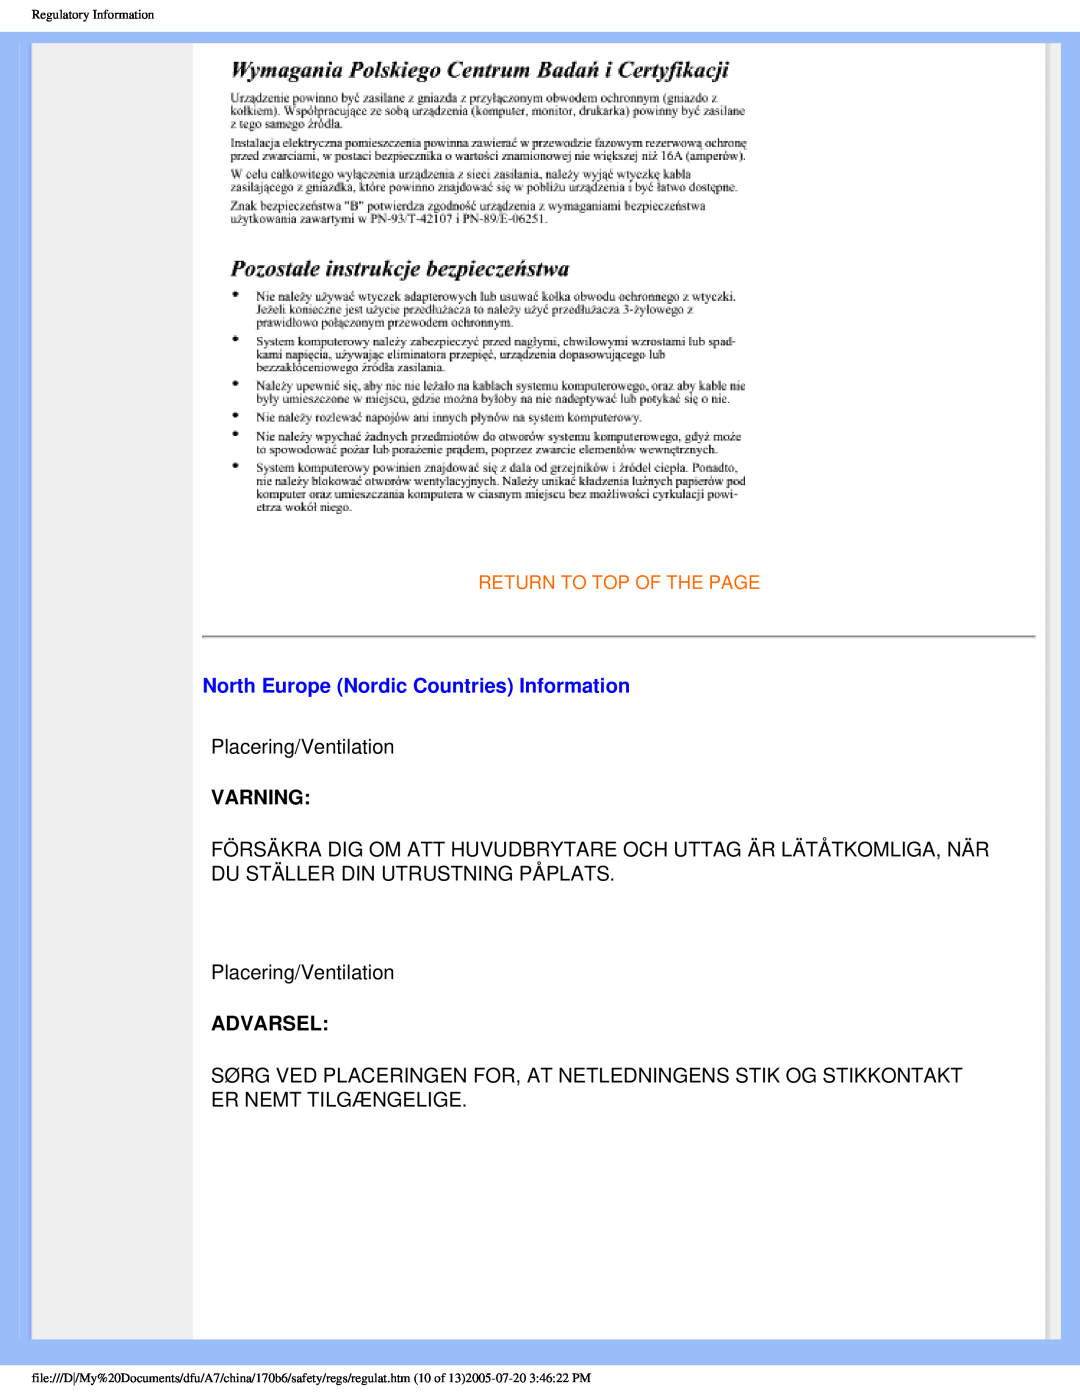 Philips 170B6 user manual North Europe Nordic Countries Information, Varning, Advarsel 